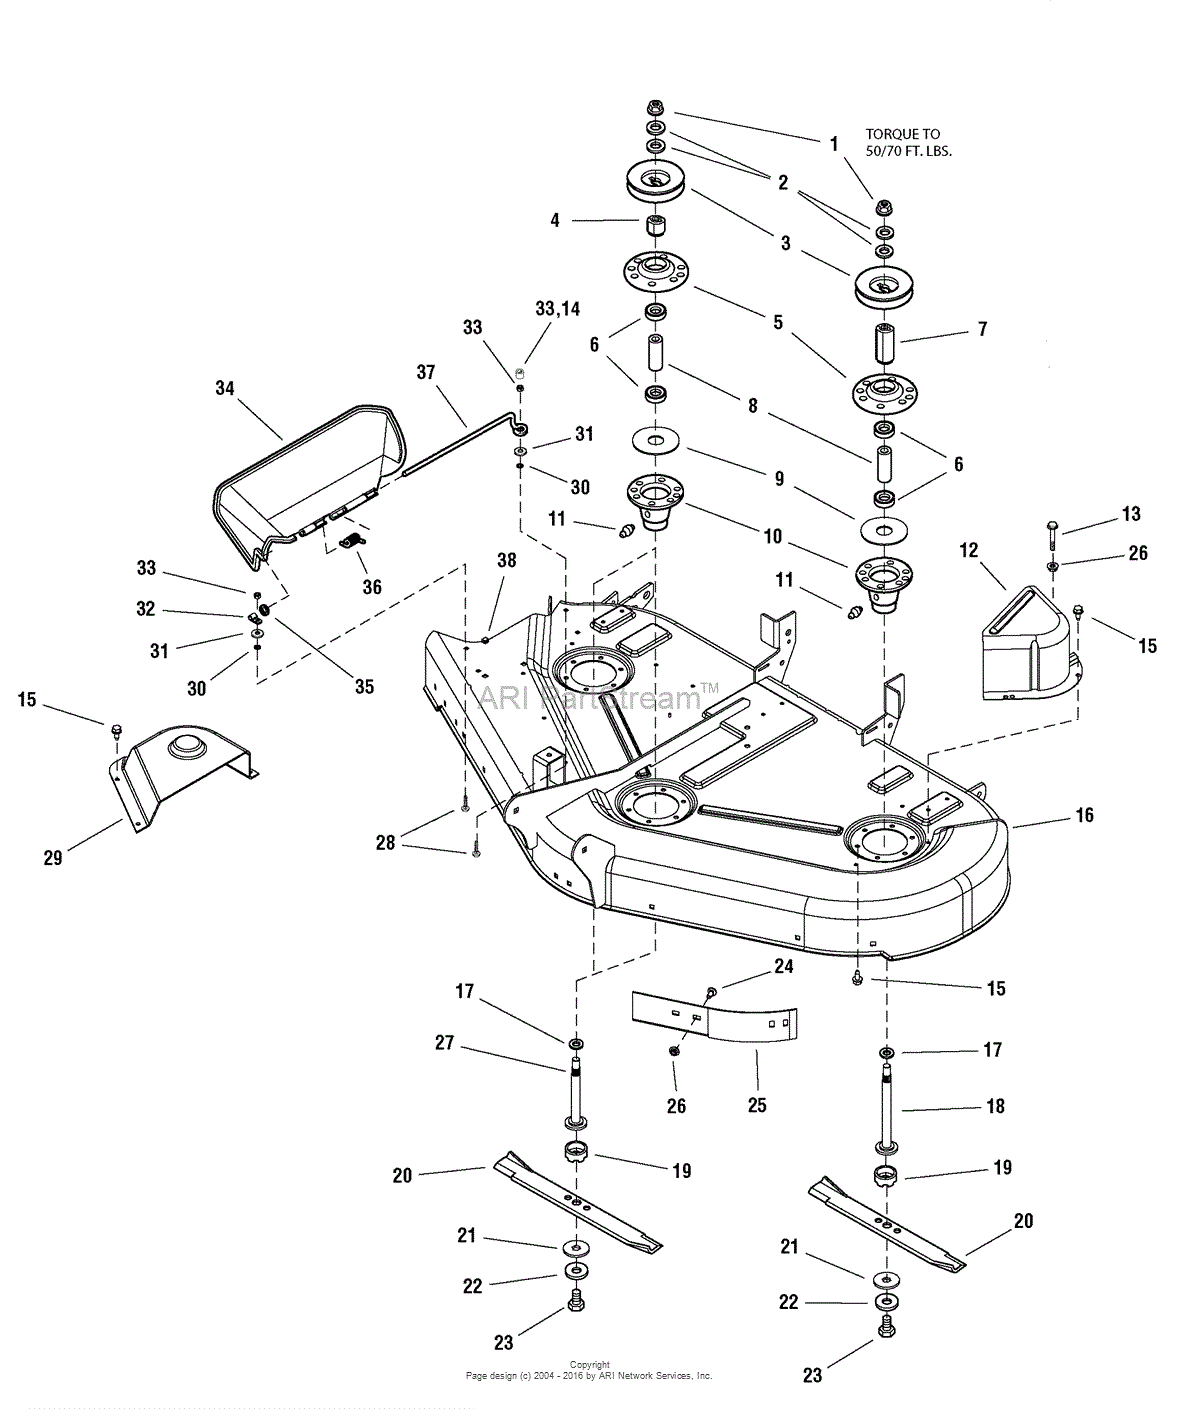 dr roto hog wiring diagram